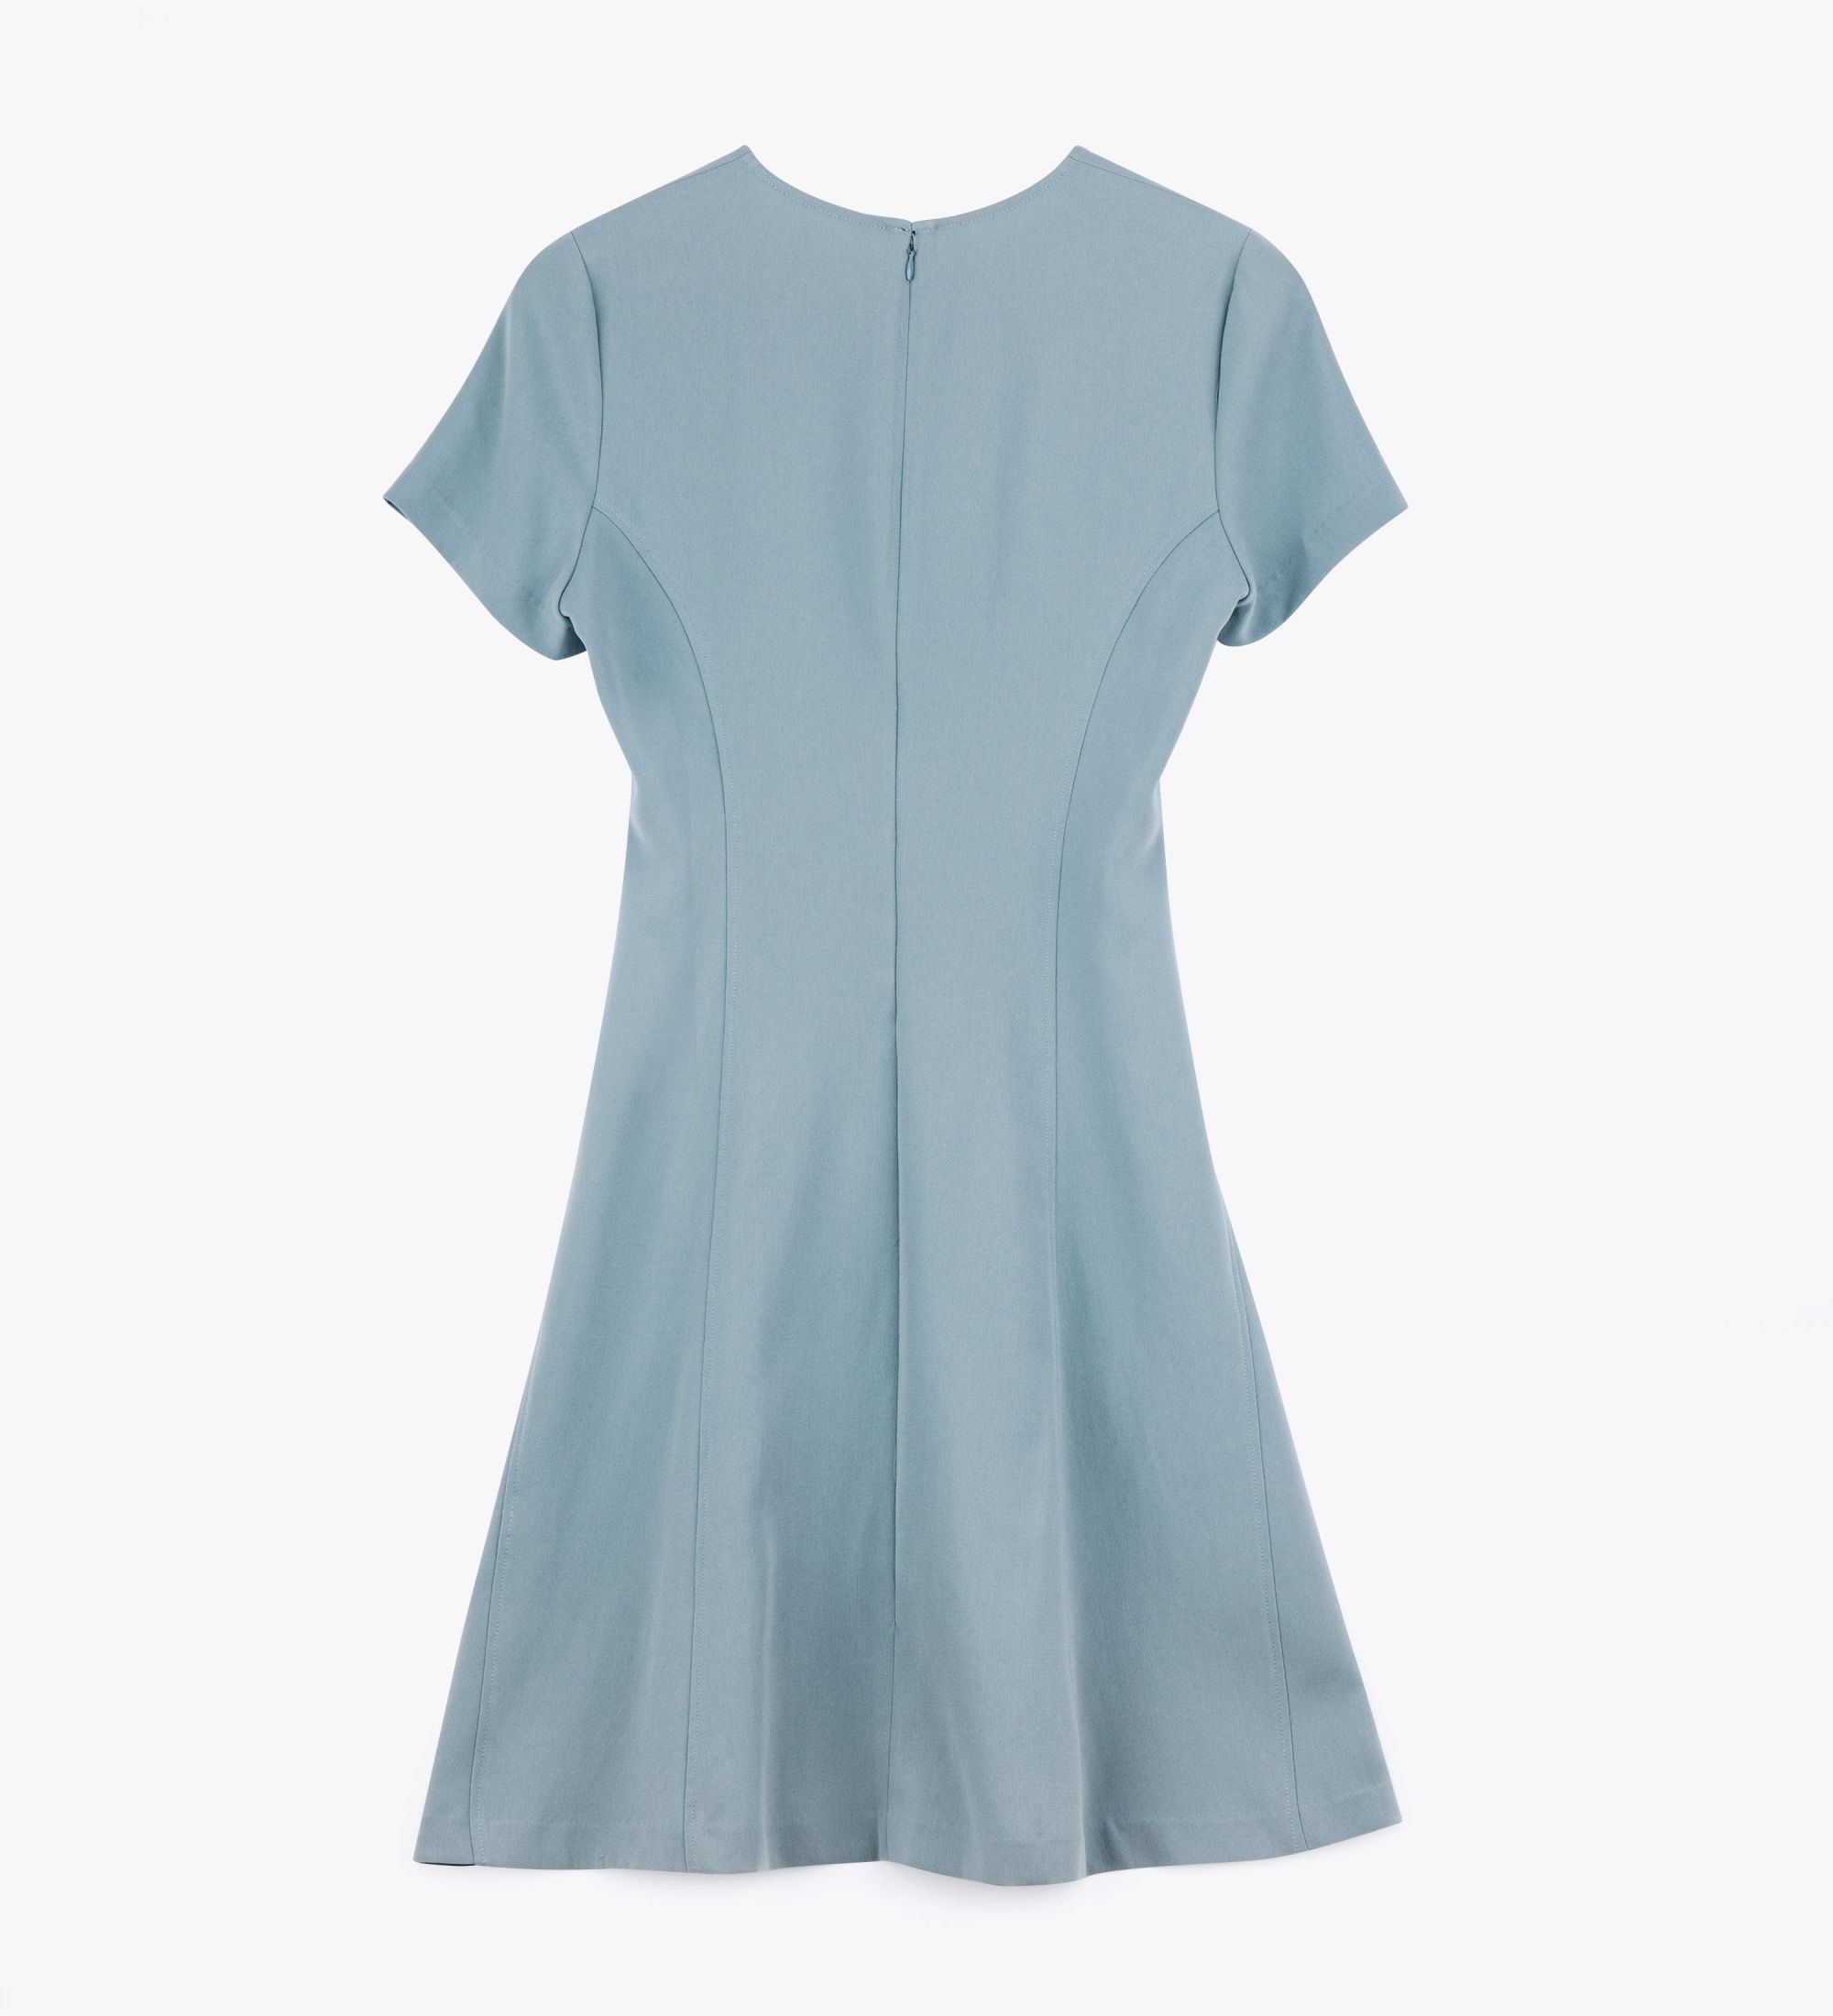 LEEZ Women Round Neck Short-Sleeve Flare Dress - Blue